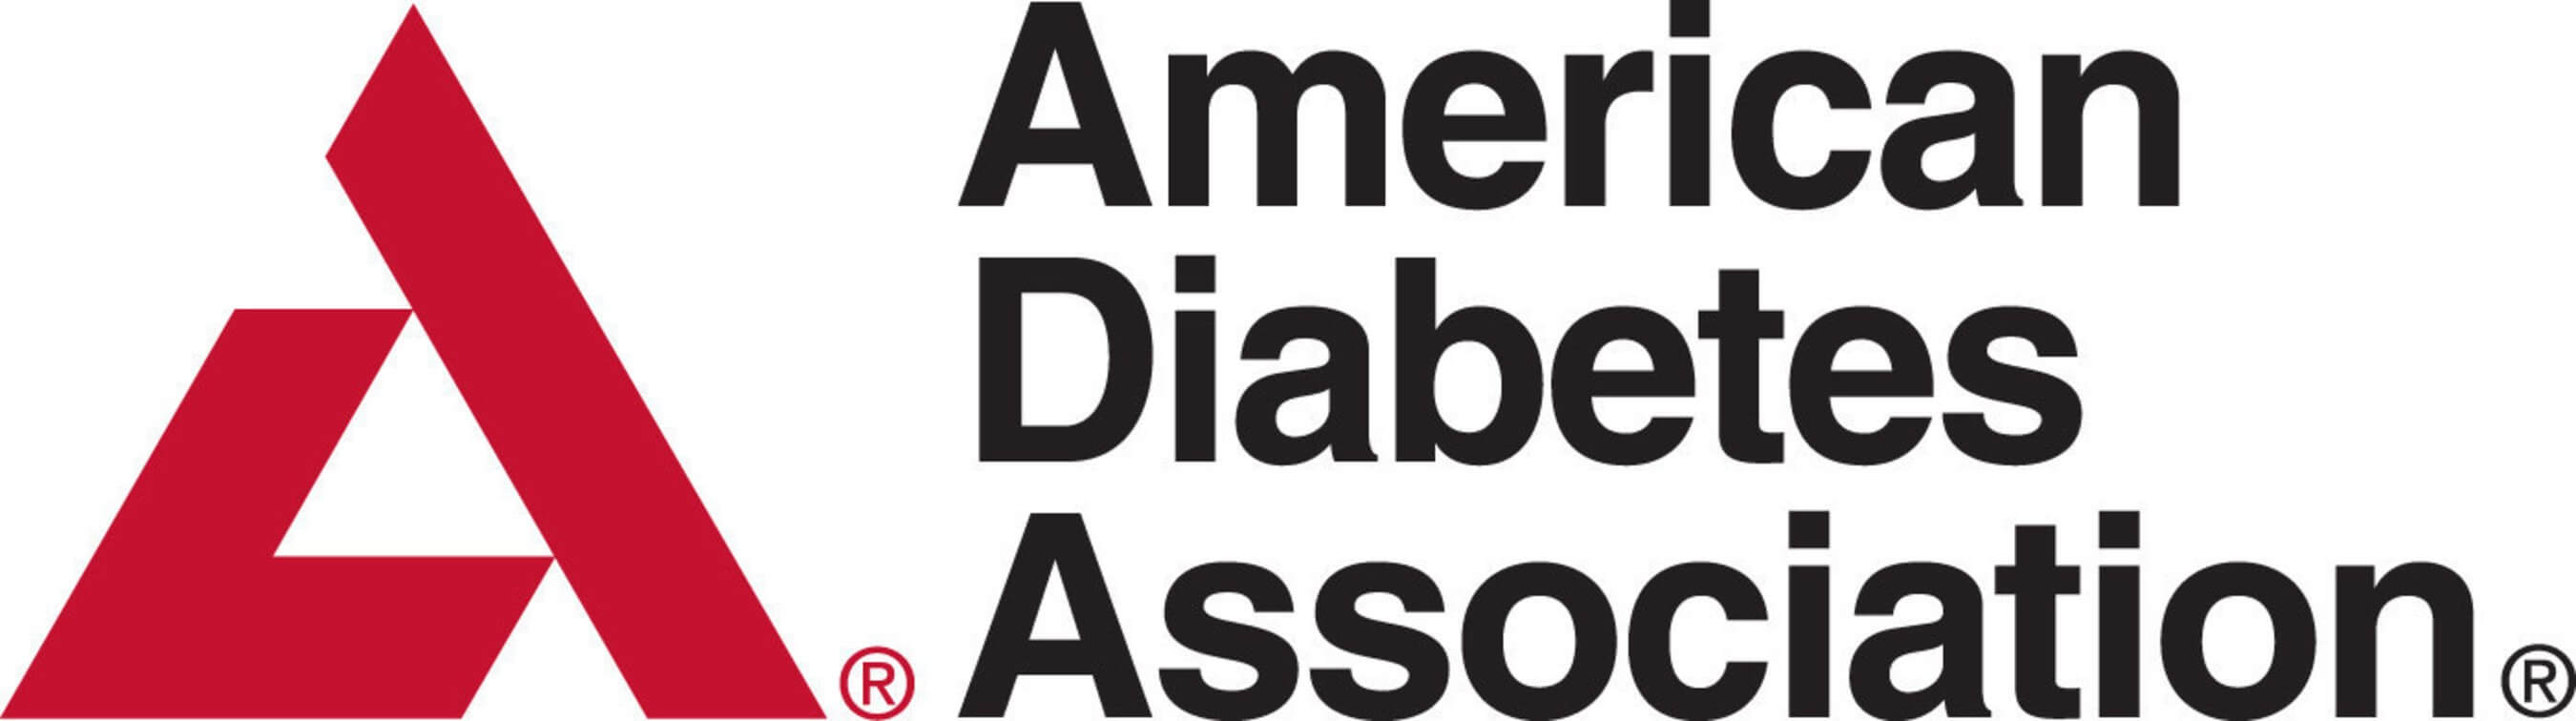 MDH Diabetes Education Program Earns ADA Recognition